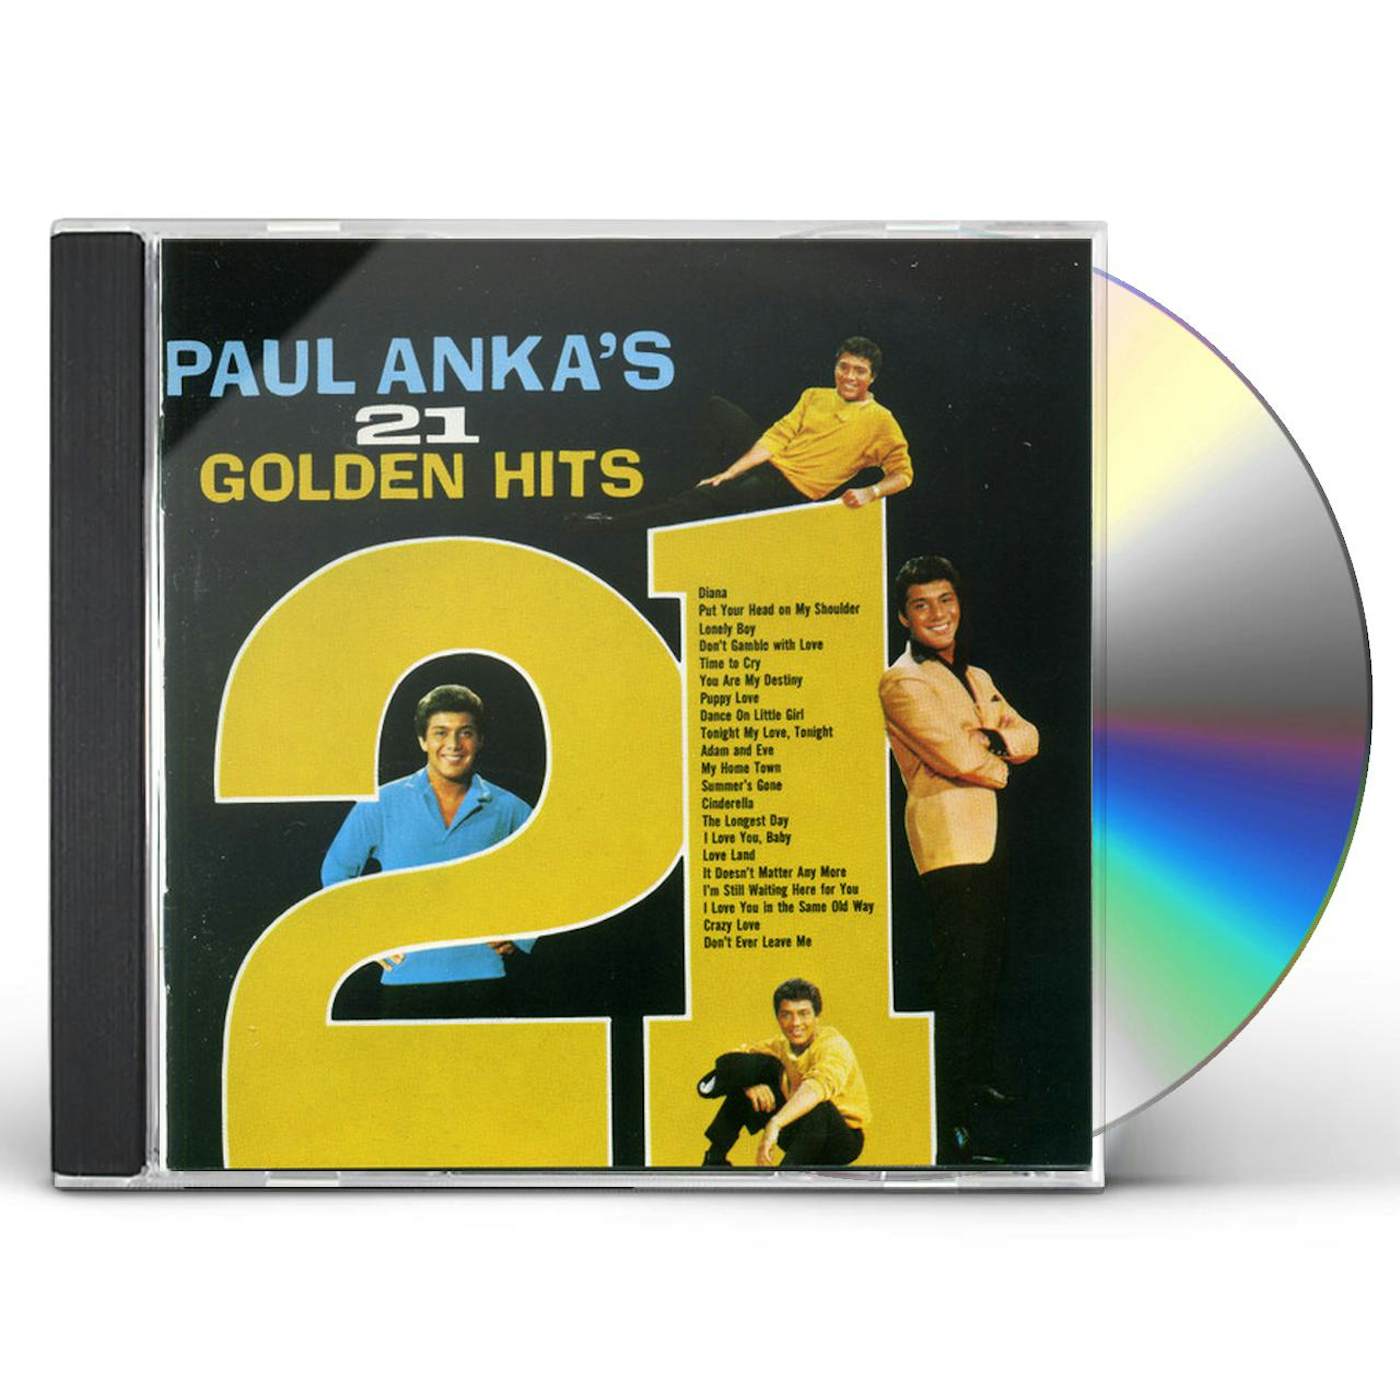 Paul Anka 21 GOLDEN HITS CD